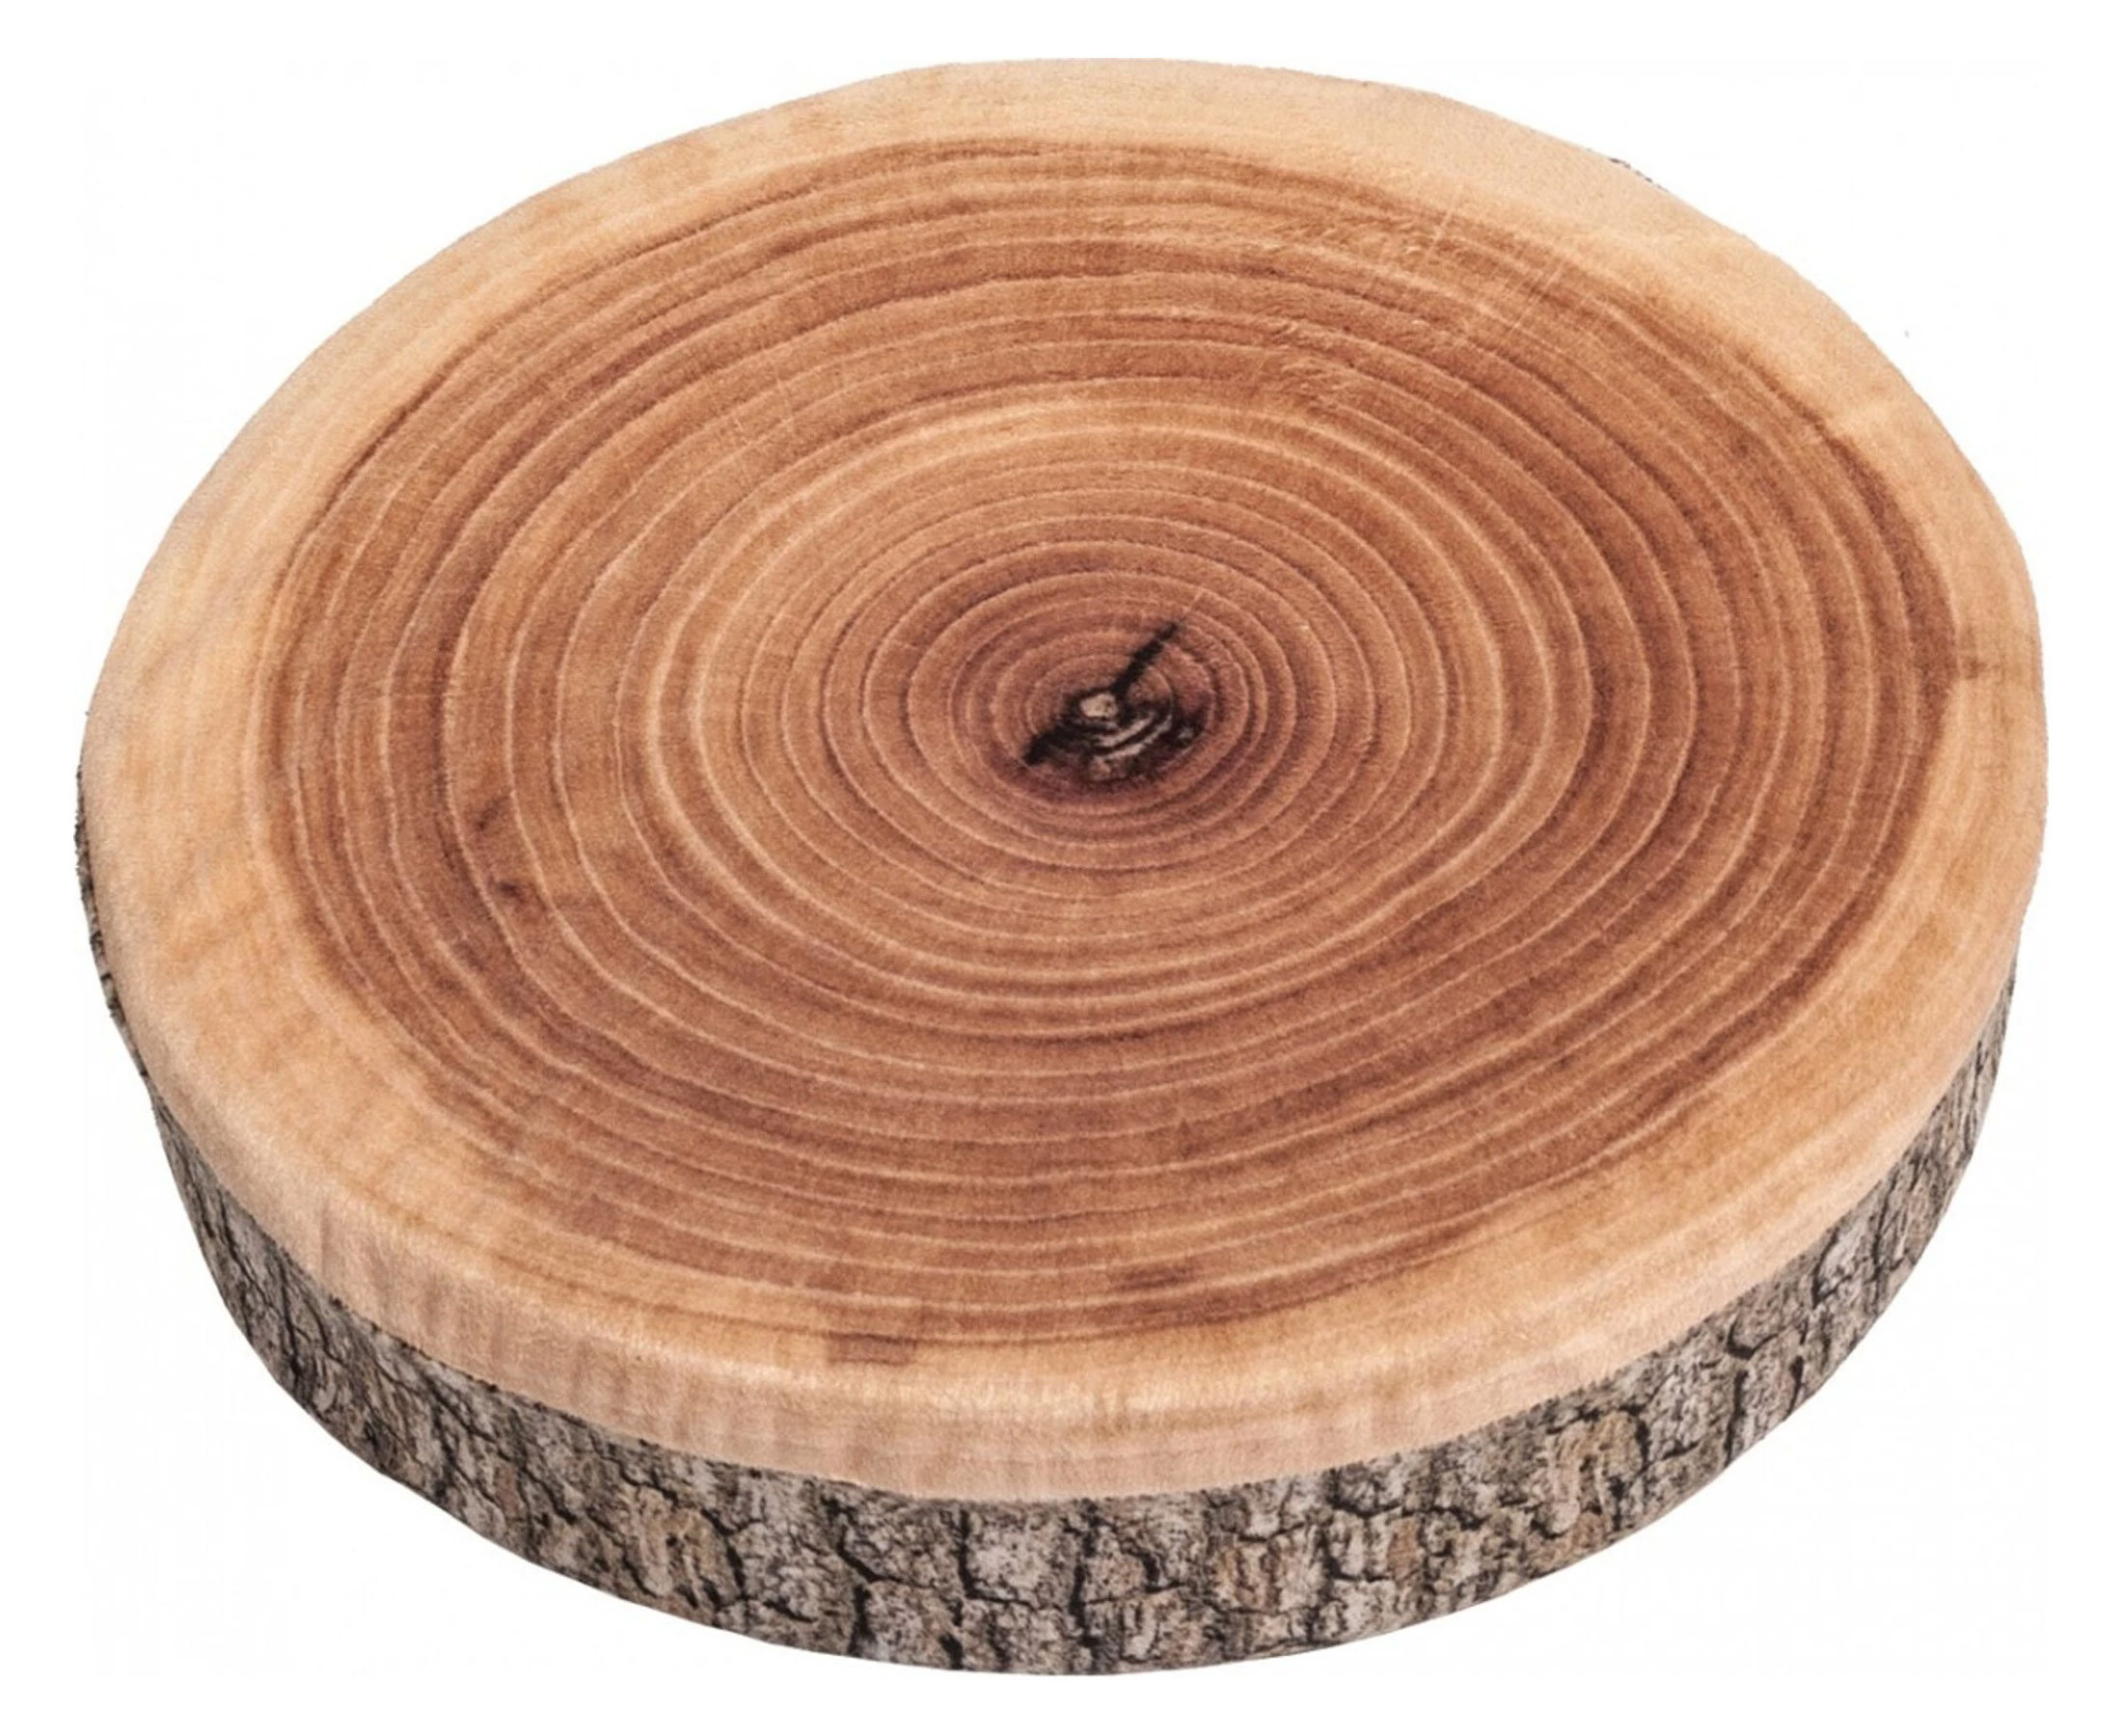 oreiller en forme de billot de bois